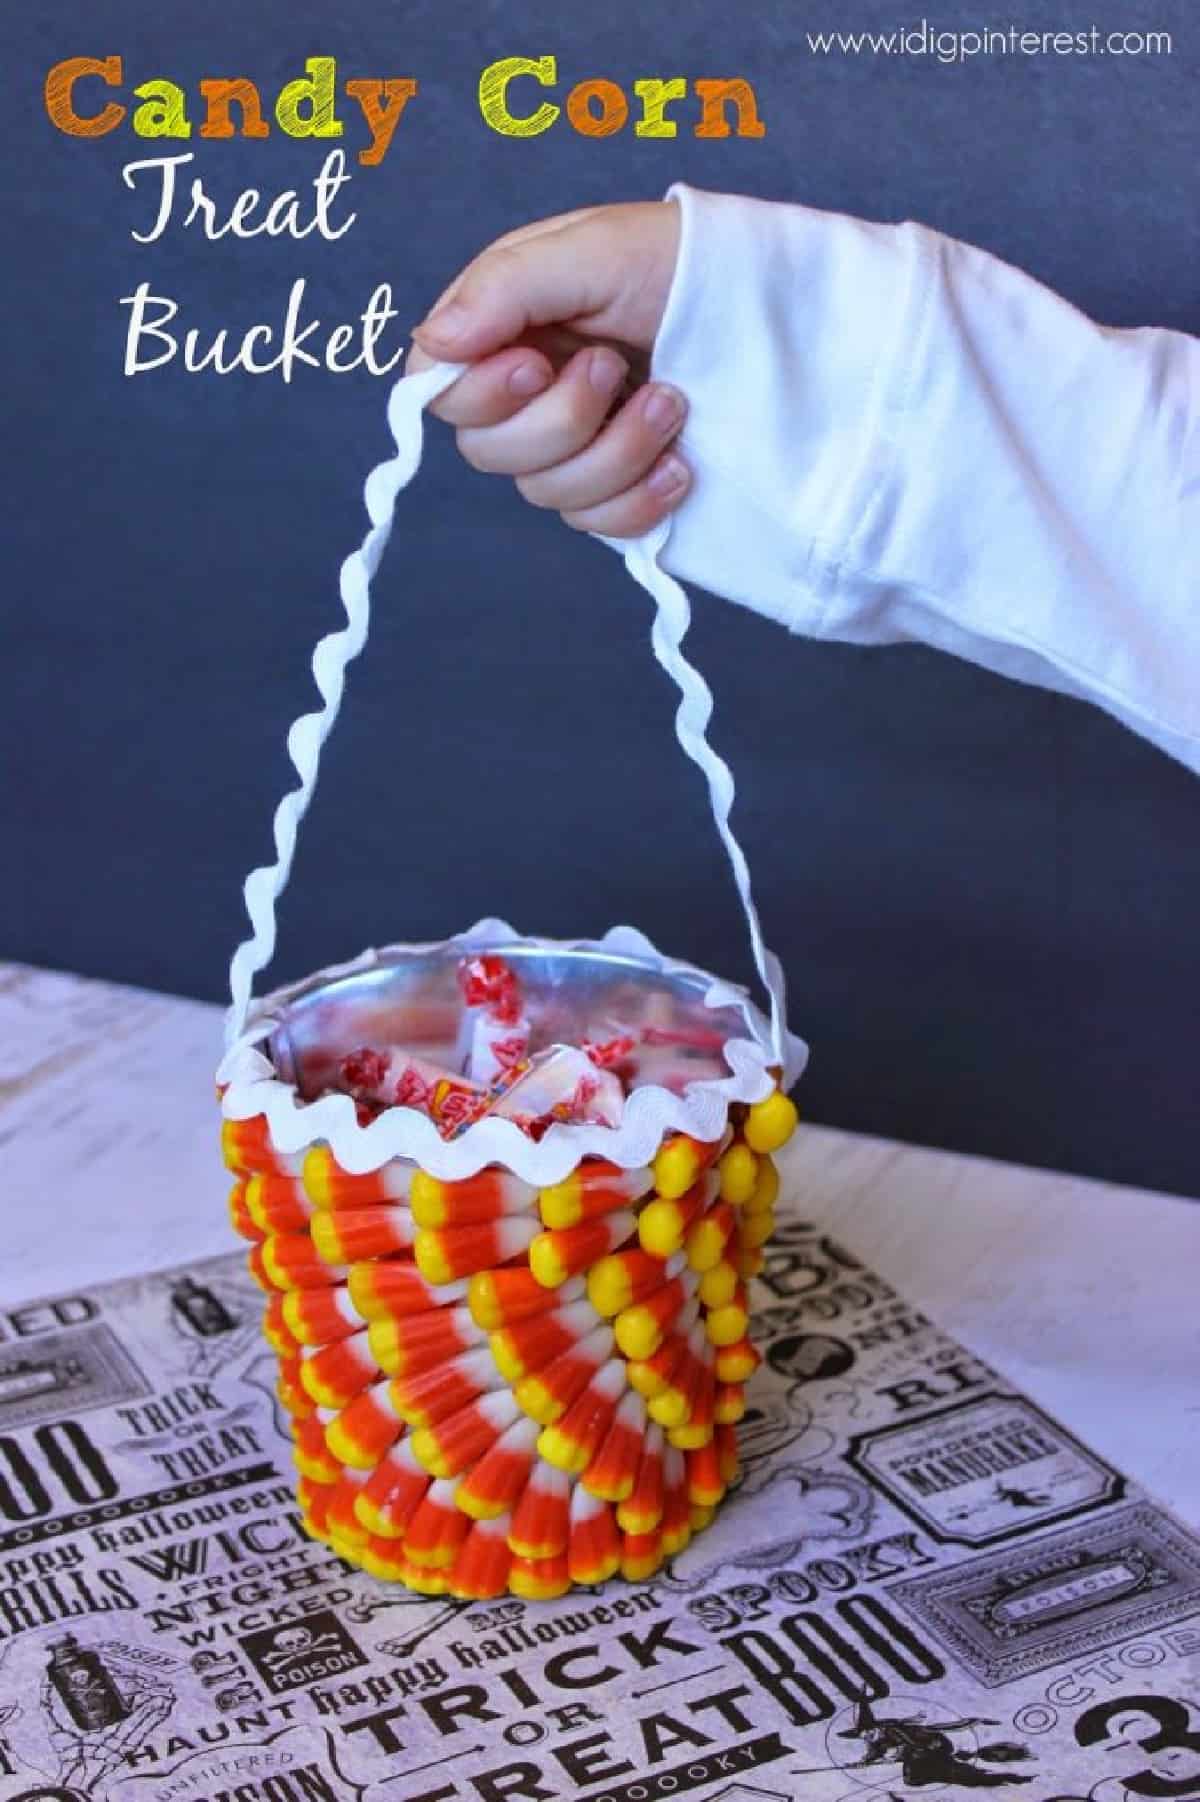 Candy Corn Treat bucket